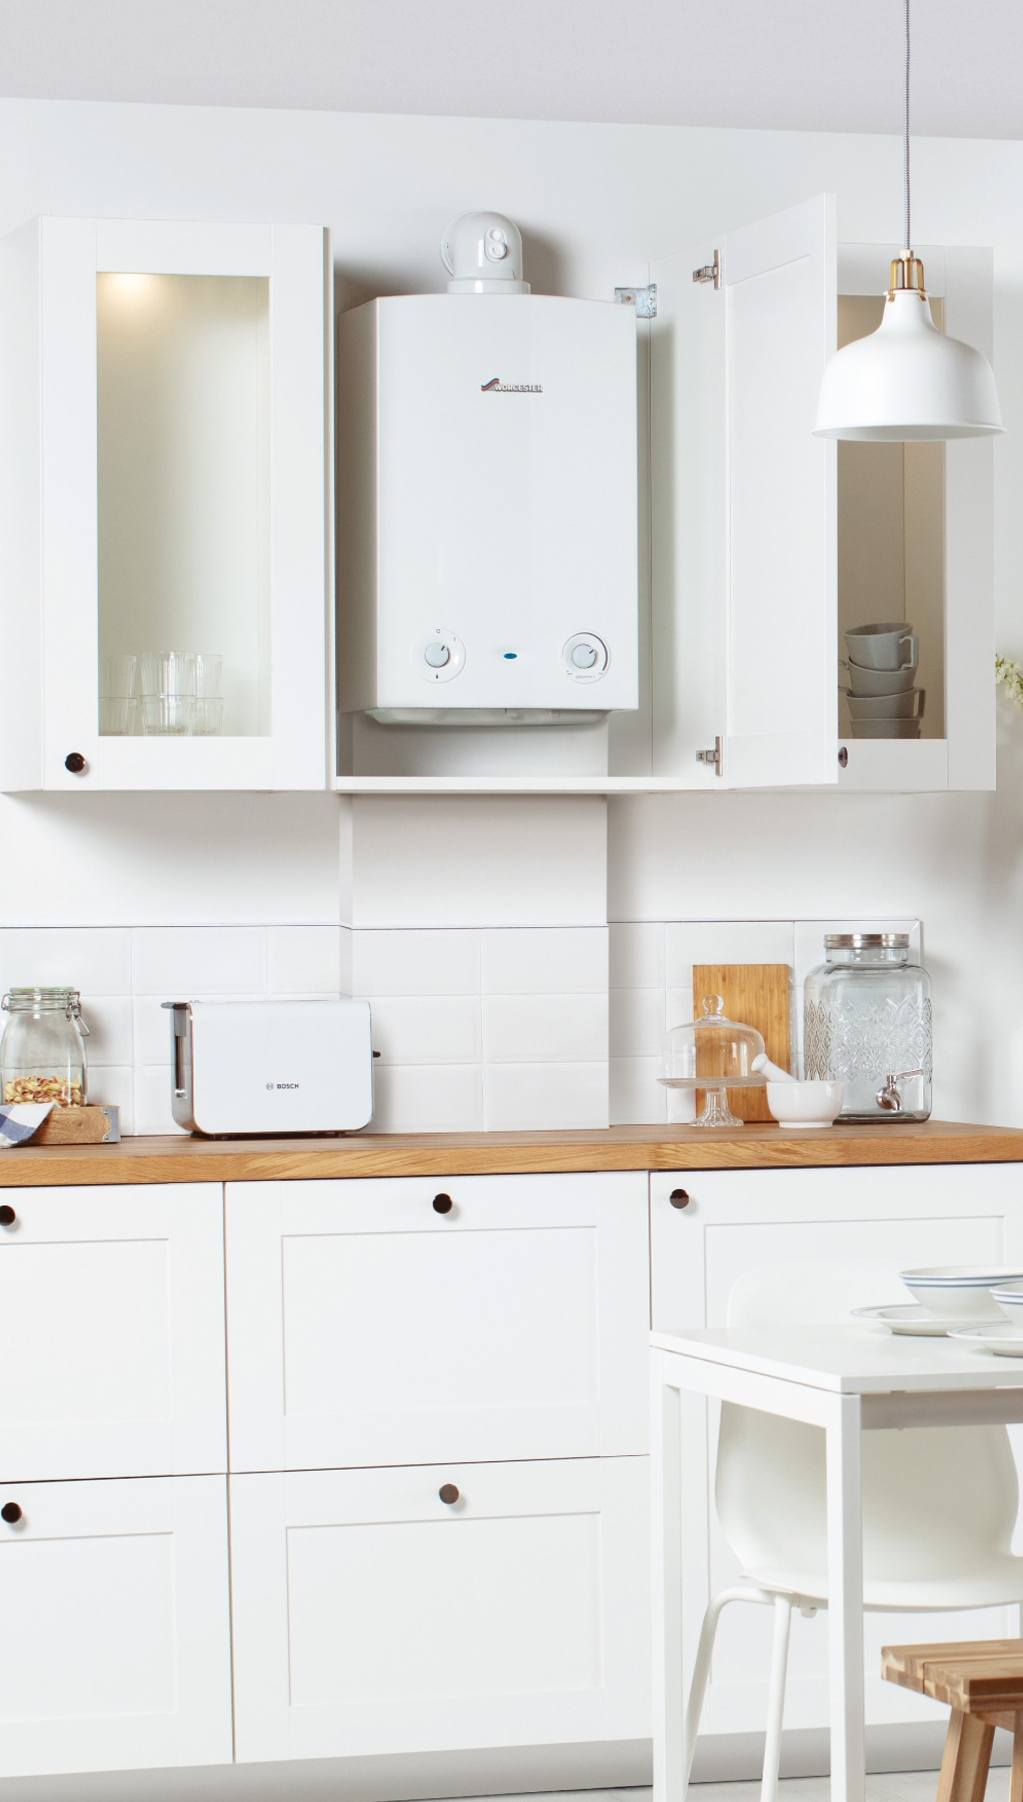 Regular boiler installed in a cupboard, in a white kitchen